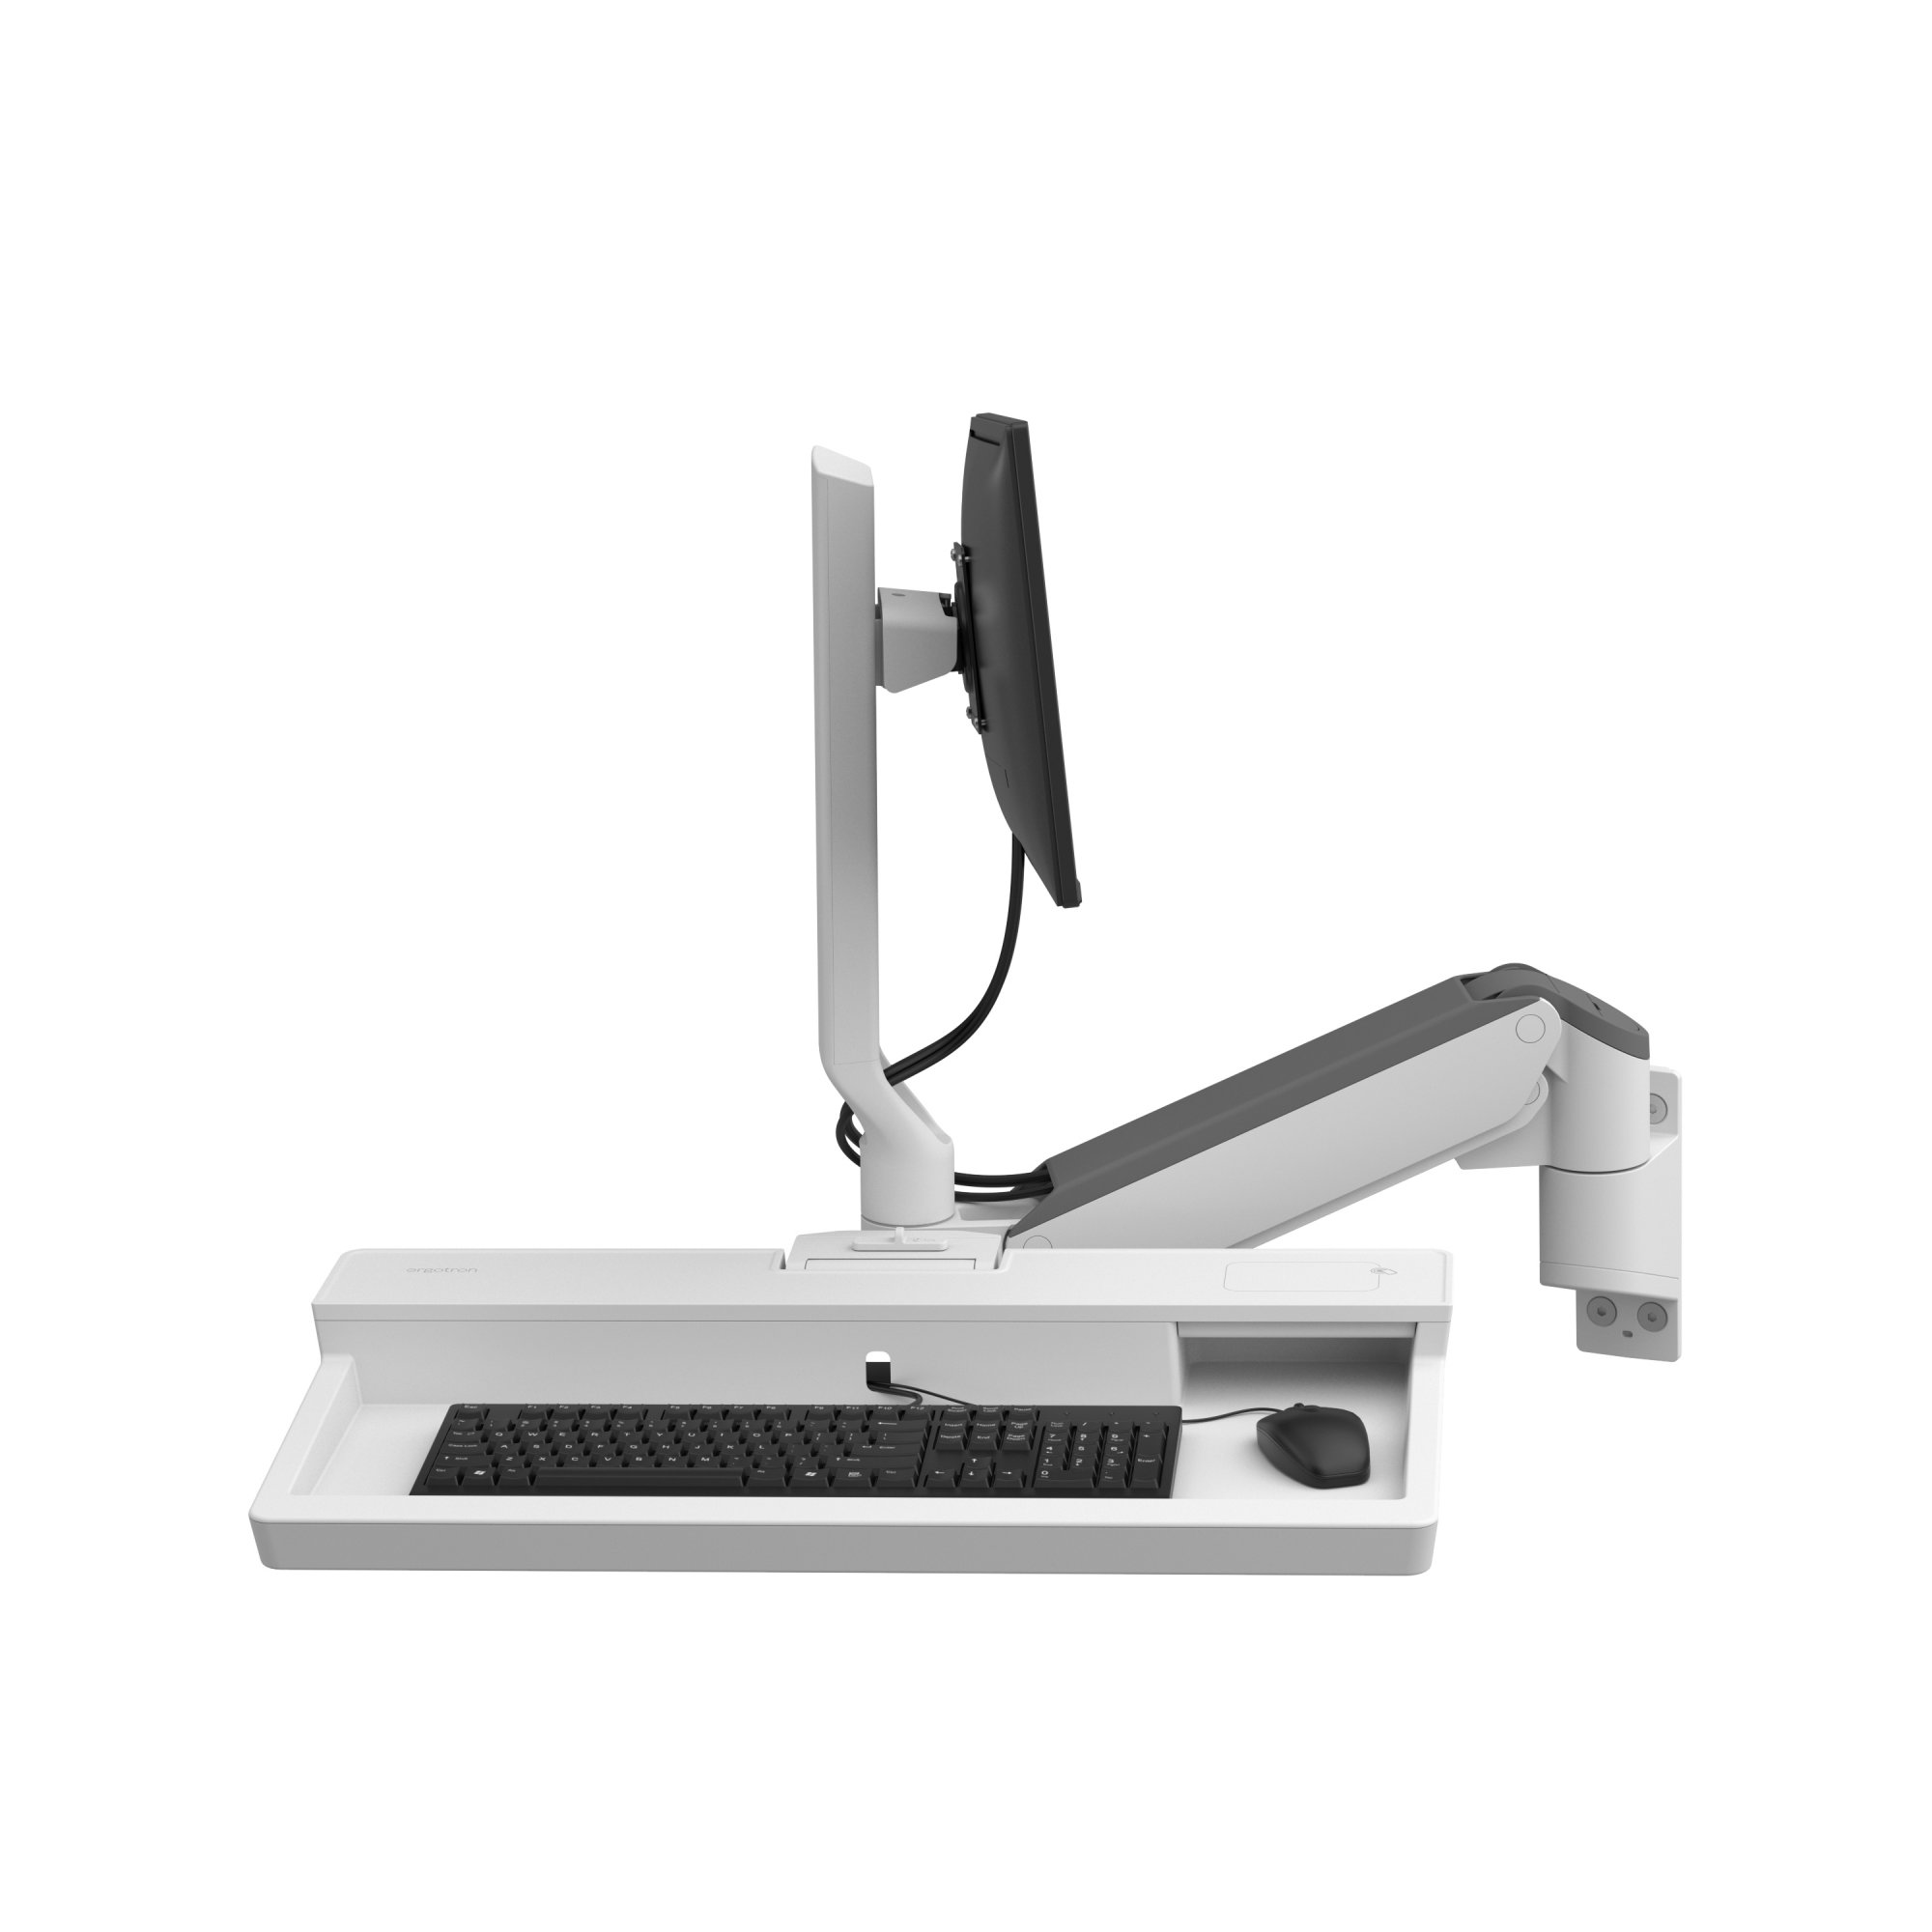 Ergotron 45-621-251 CareFit Combo Keyboard and Monitor Mount Arm